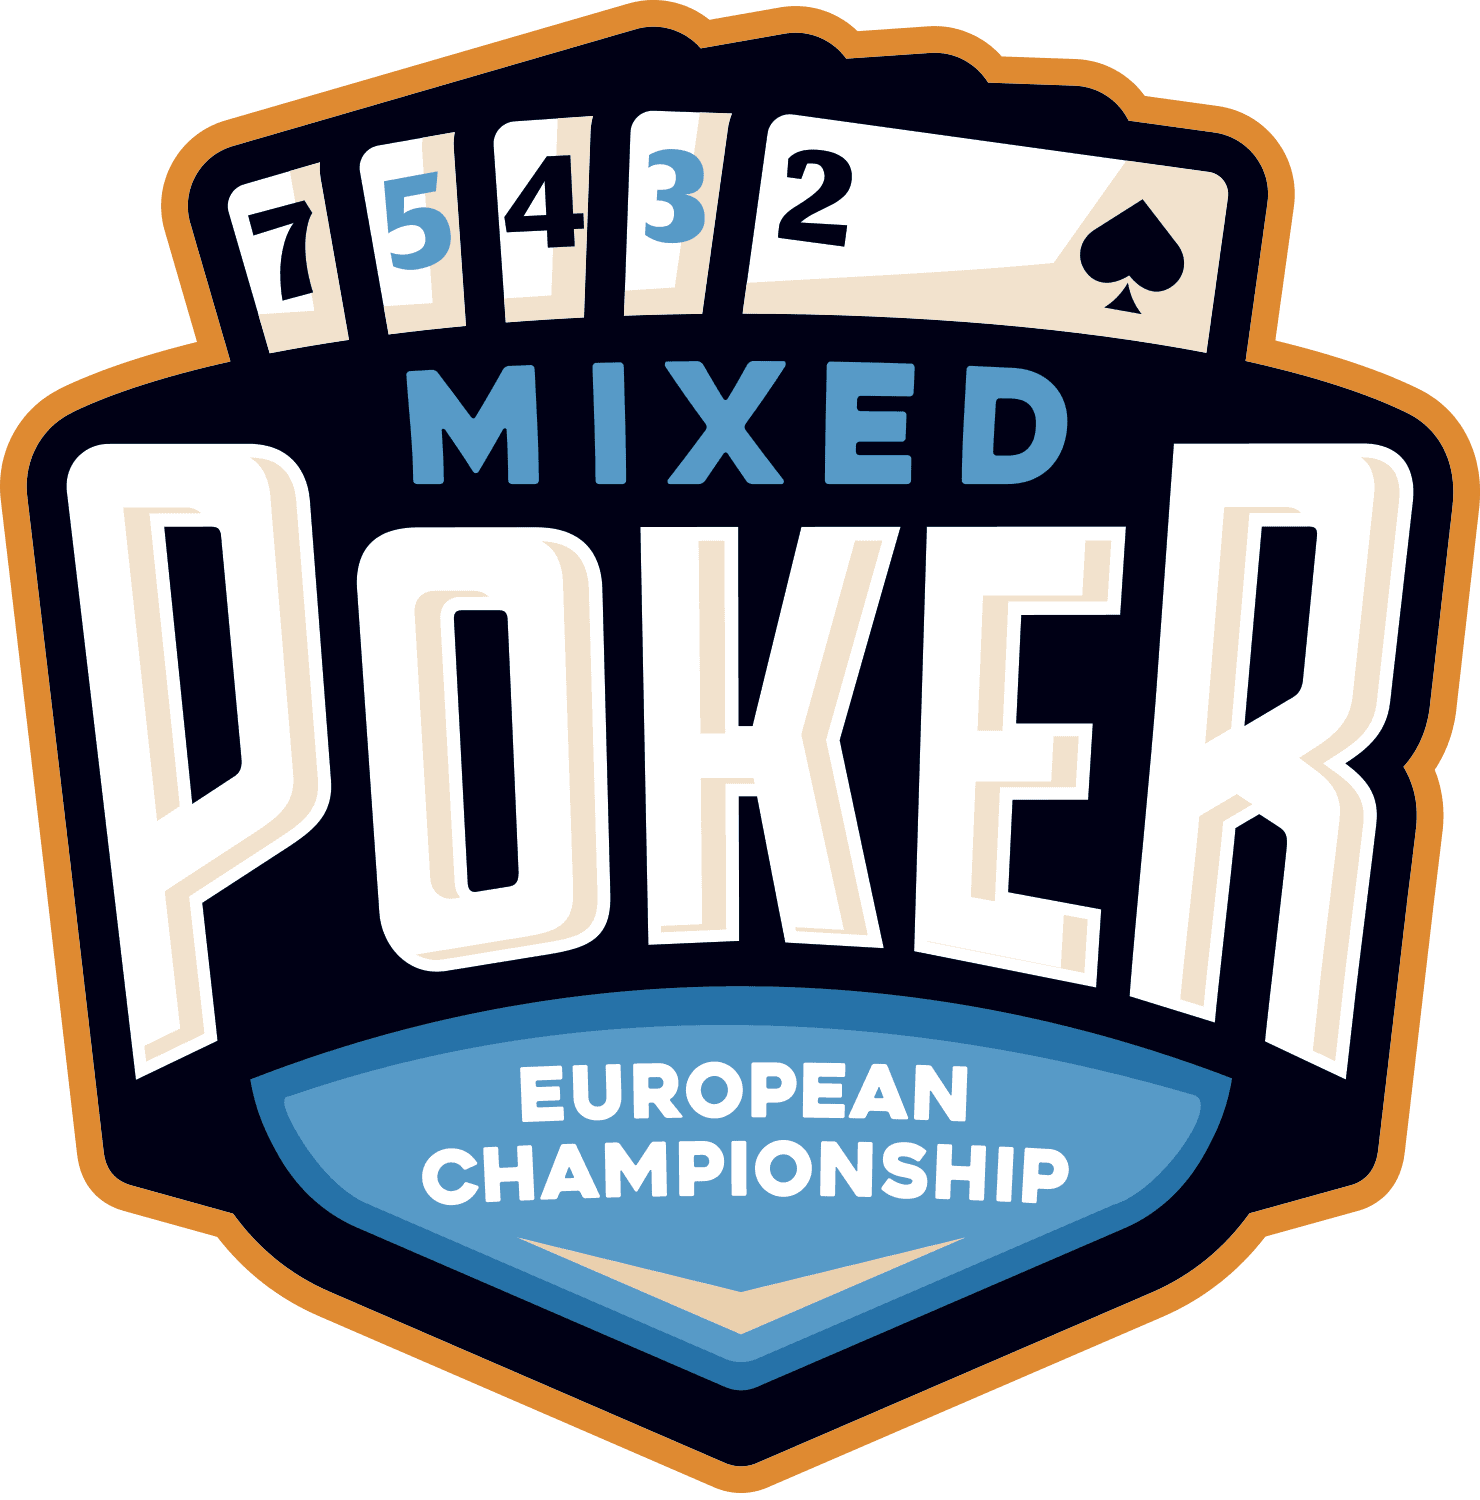 European Mixed Poker Championship logo